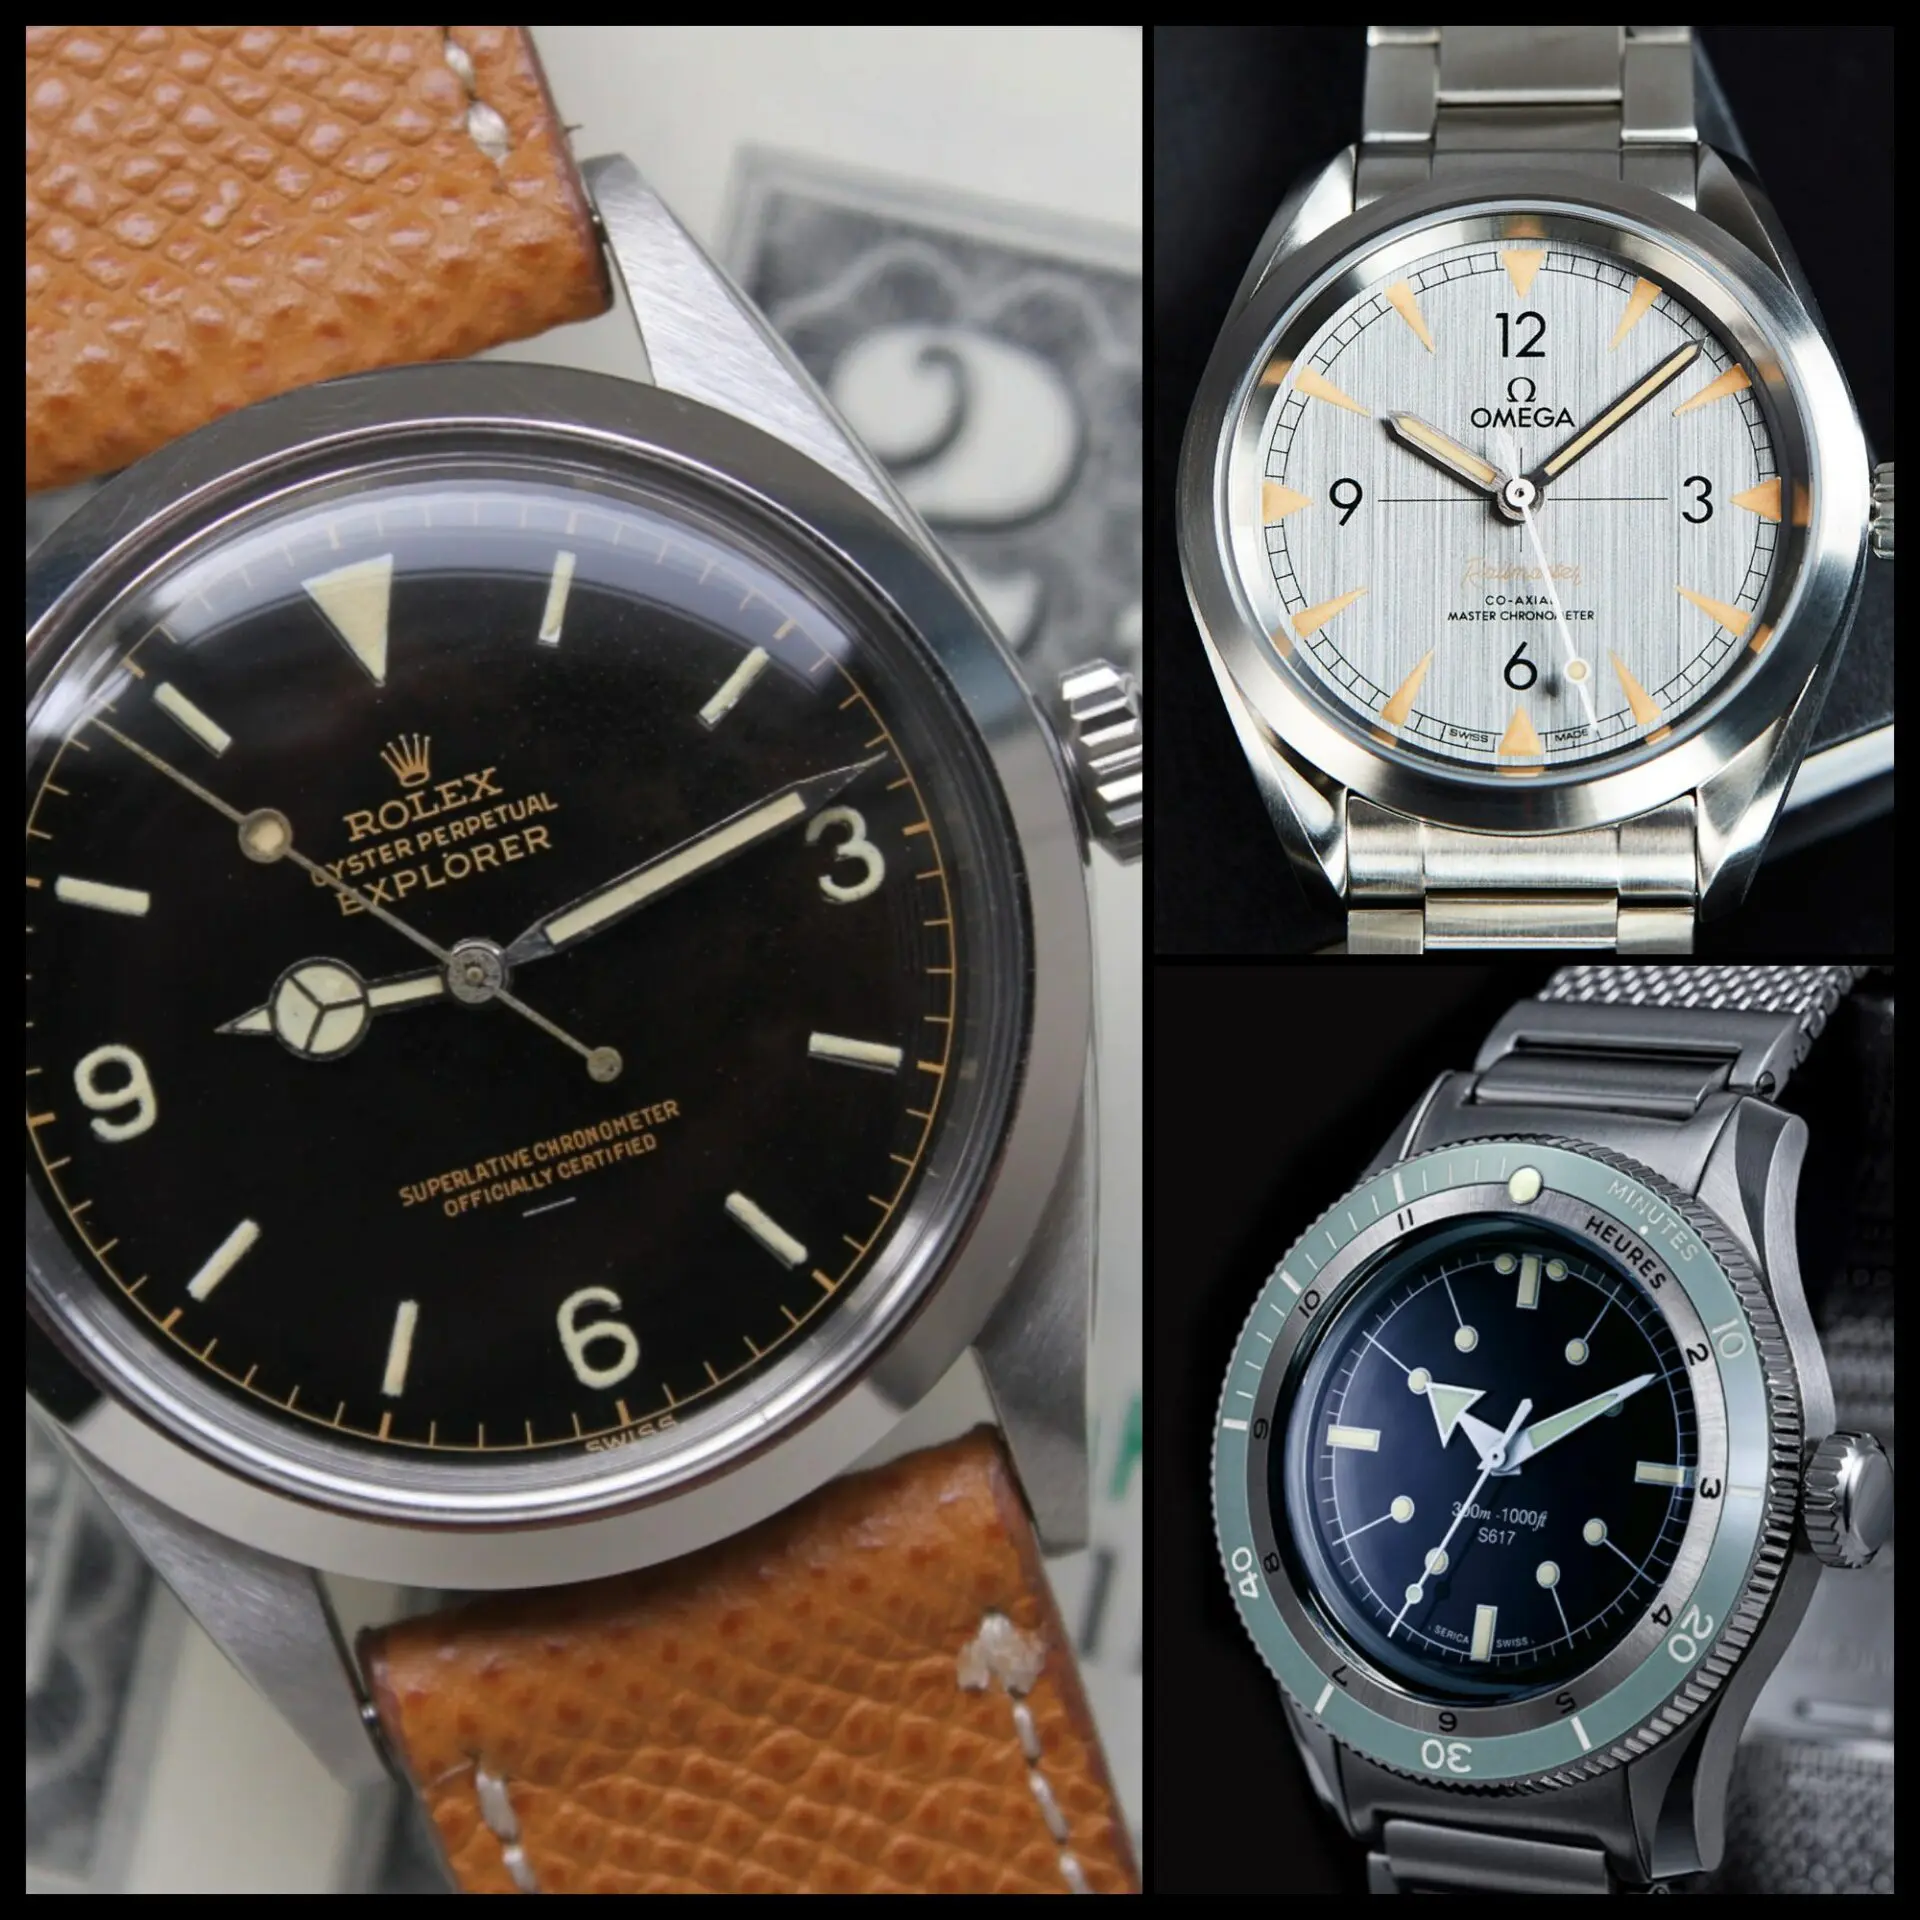 HUGO BOSS Watches – Elaborate designs | Men